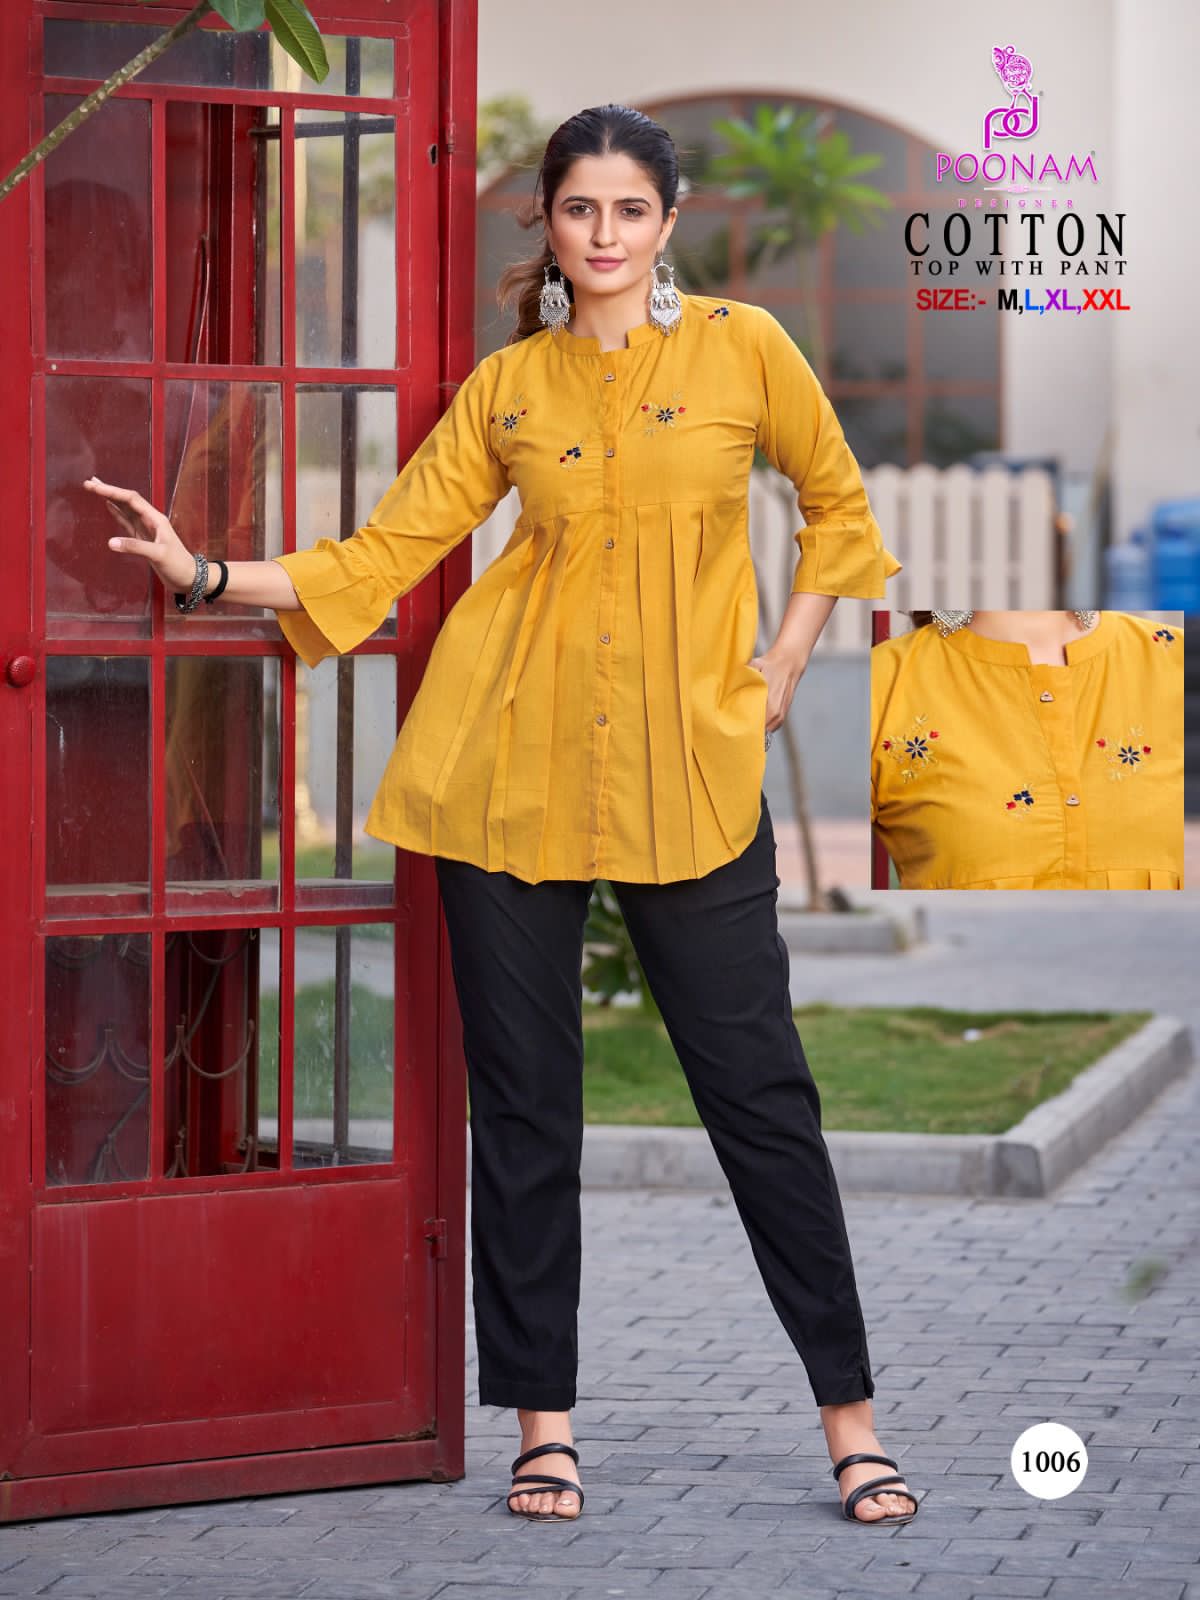 Poonam Cotton collection 3